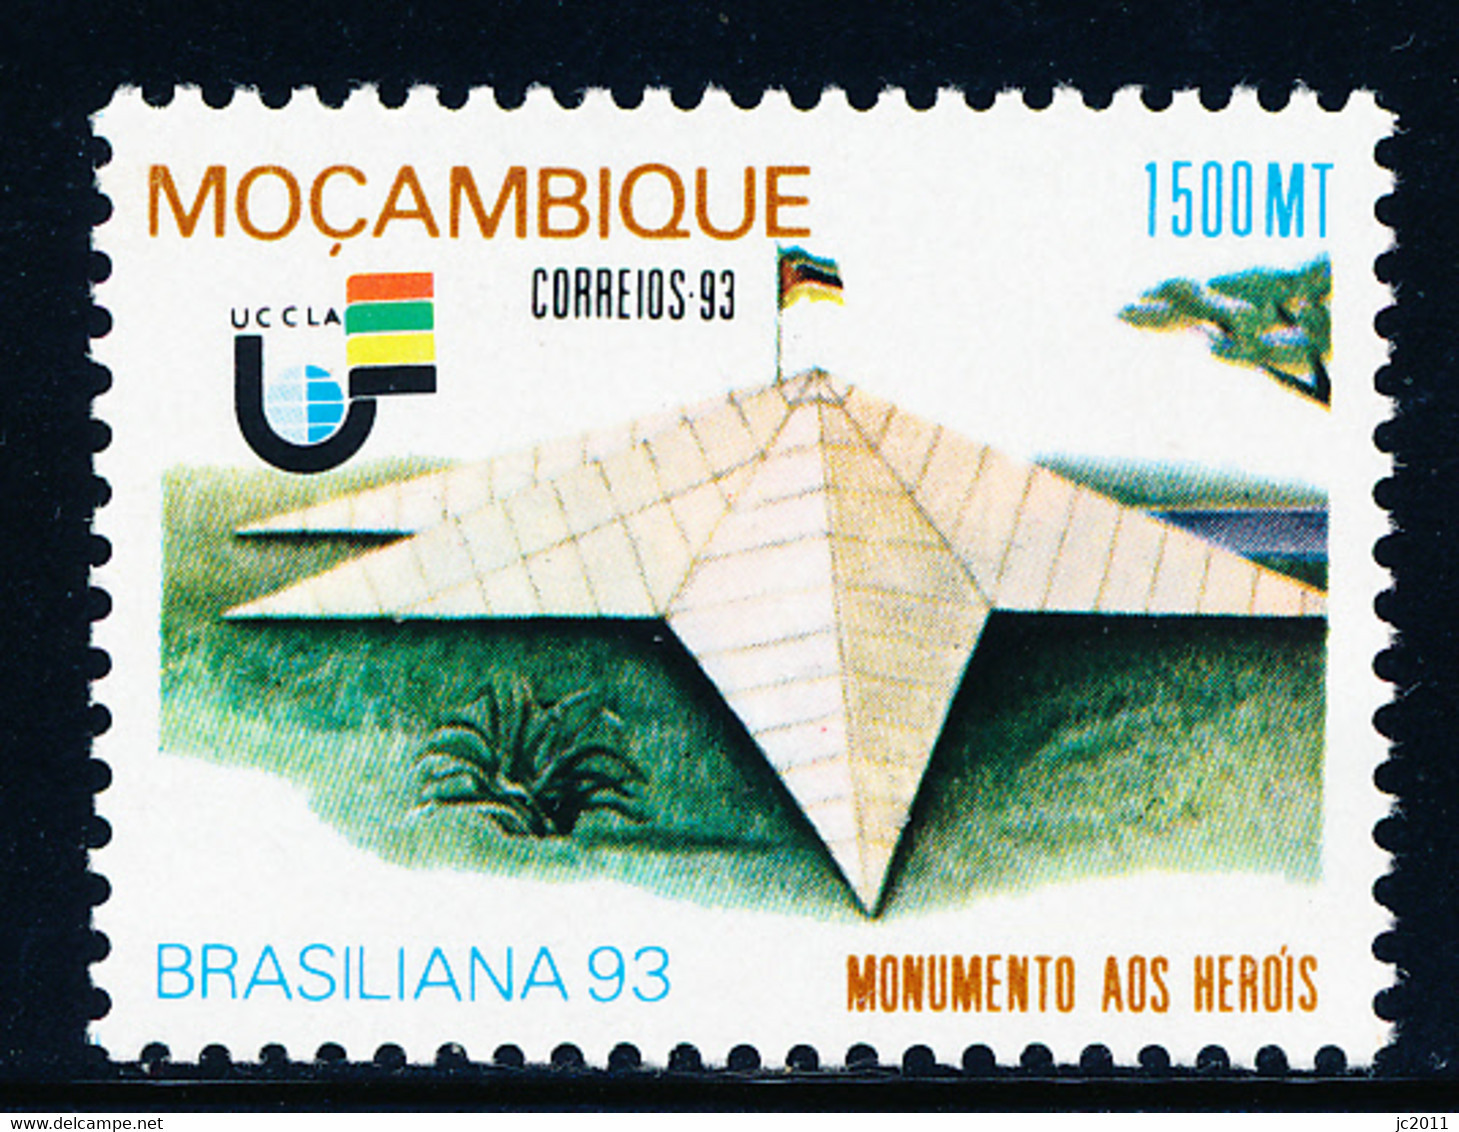 Mozambique - 1993 - Brasiliana'93 / UCCLA - MNH - Mozambique